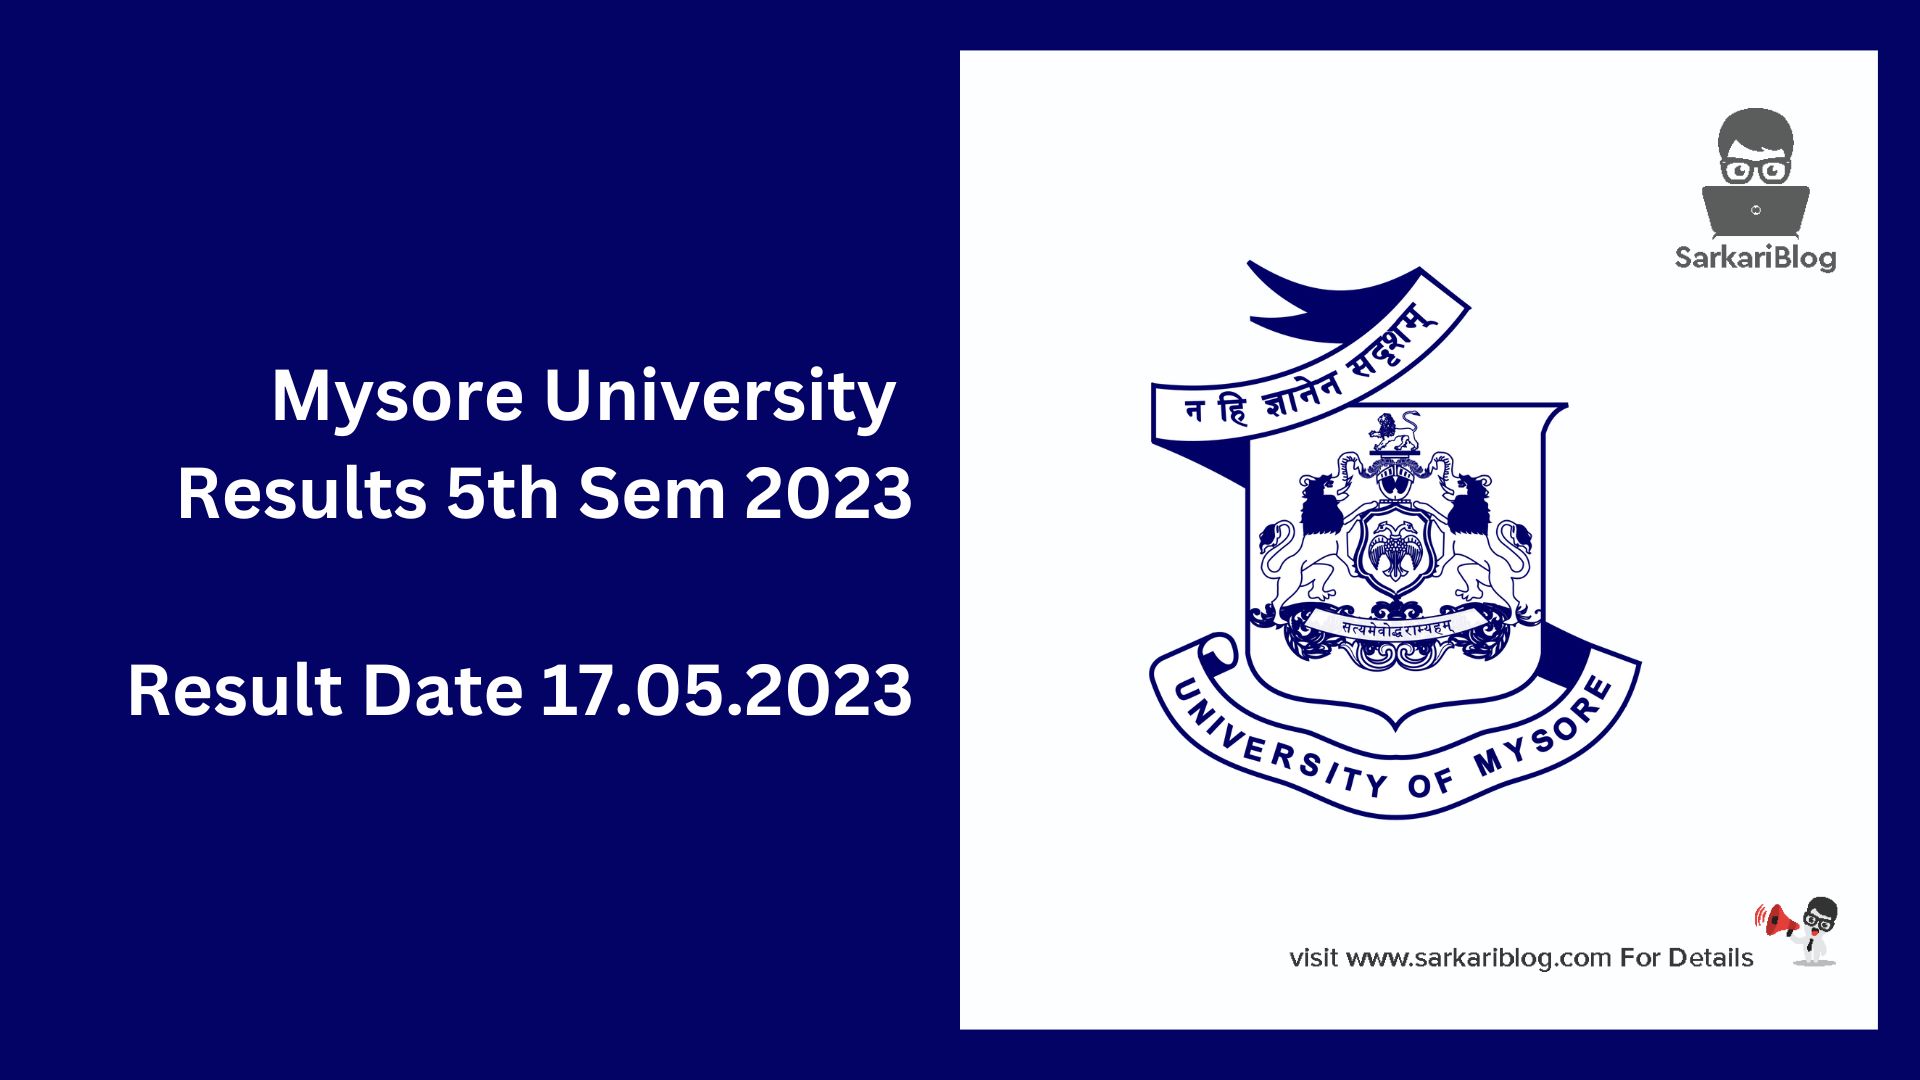 Mysore University Results 5th Sem 2023